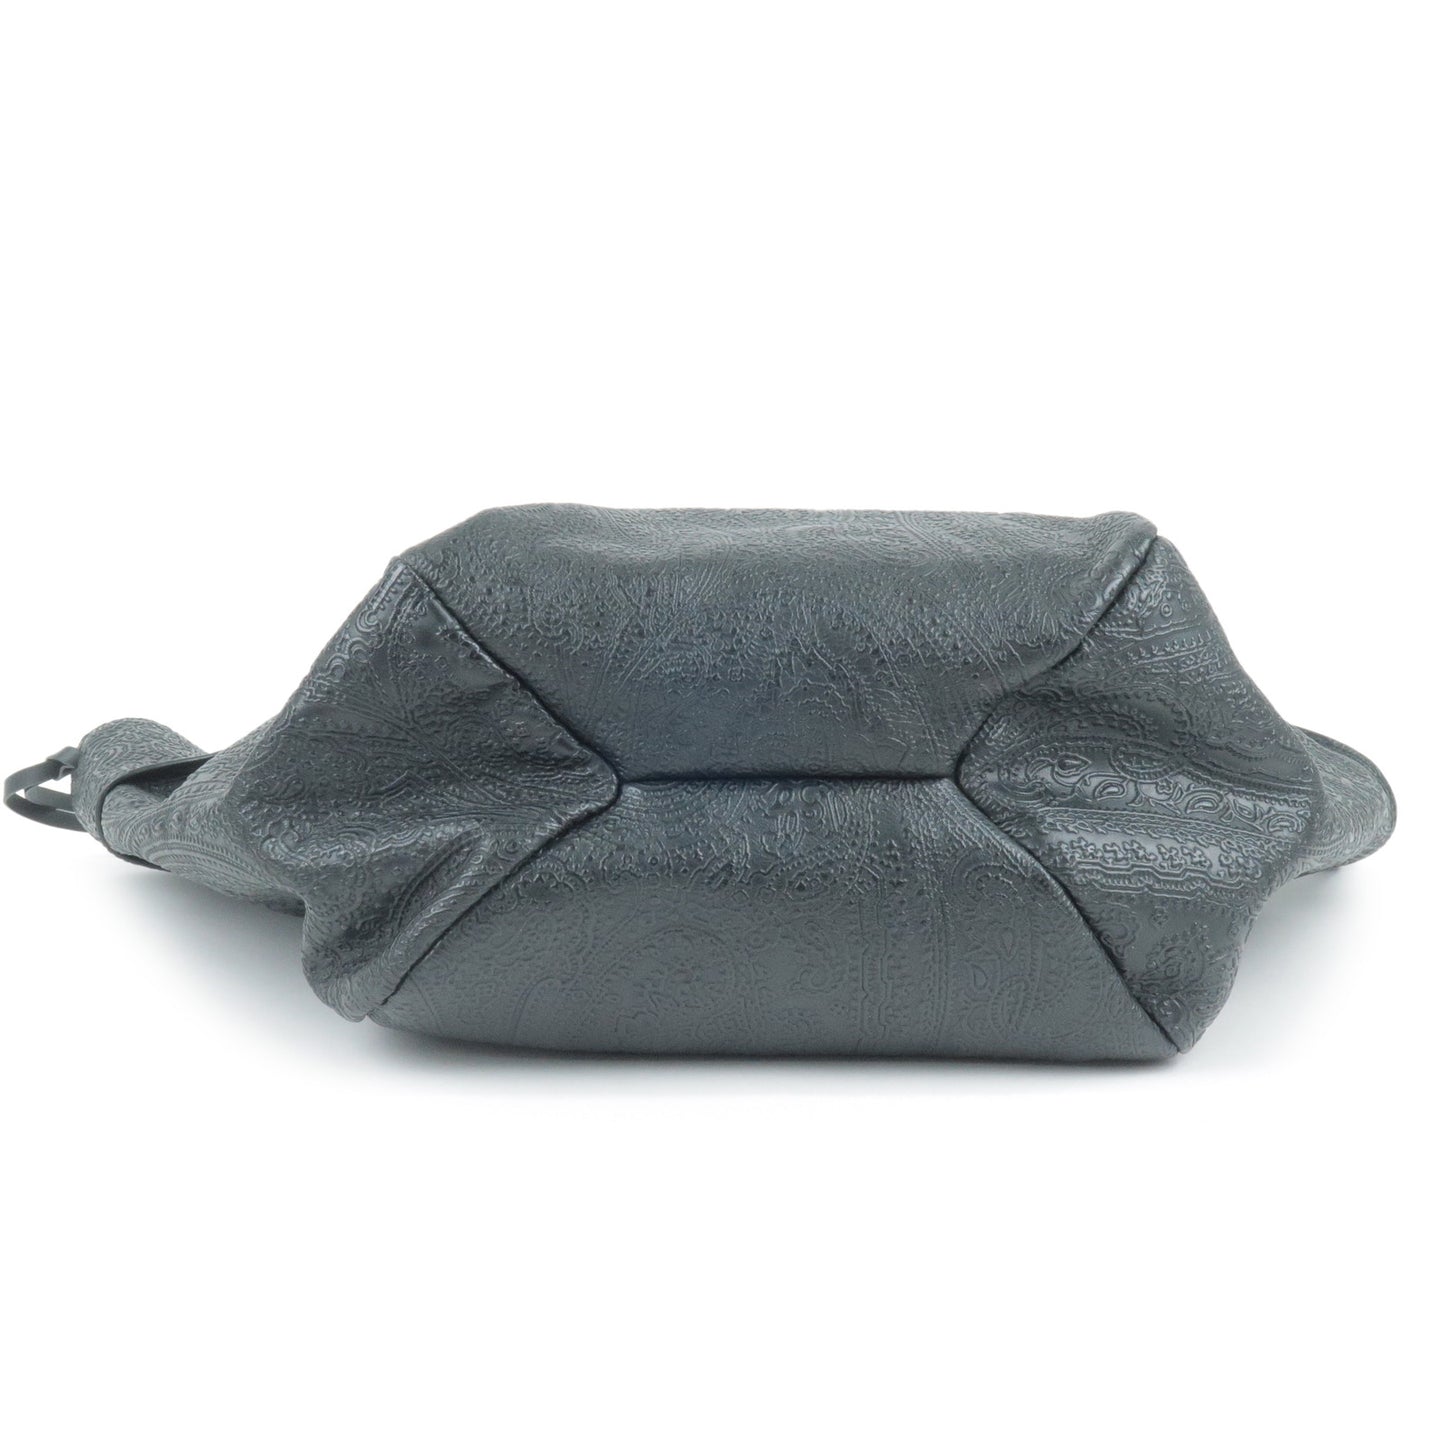 ETRO Leather Paisley Embossed Tote Bag Shoulder Bag Black